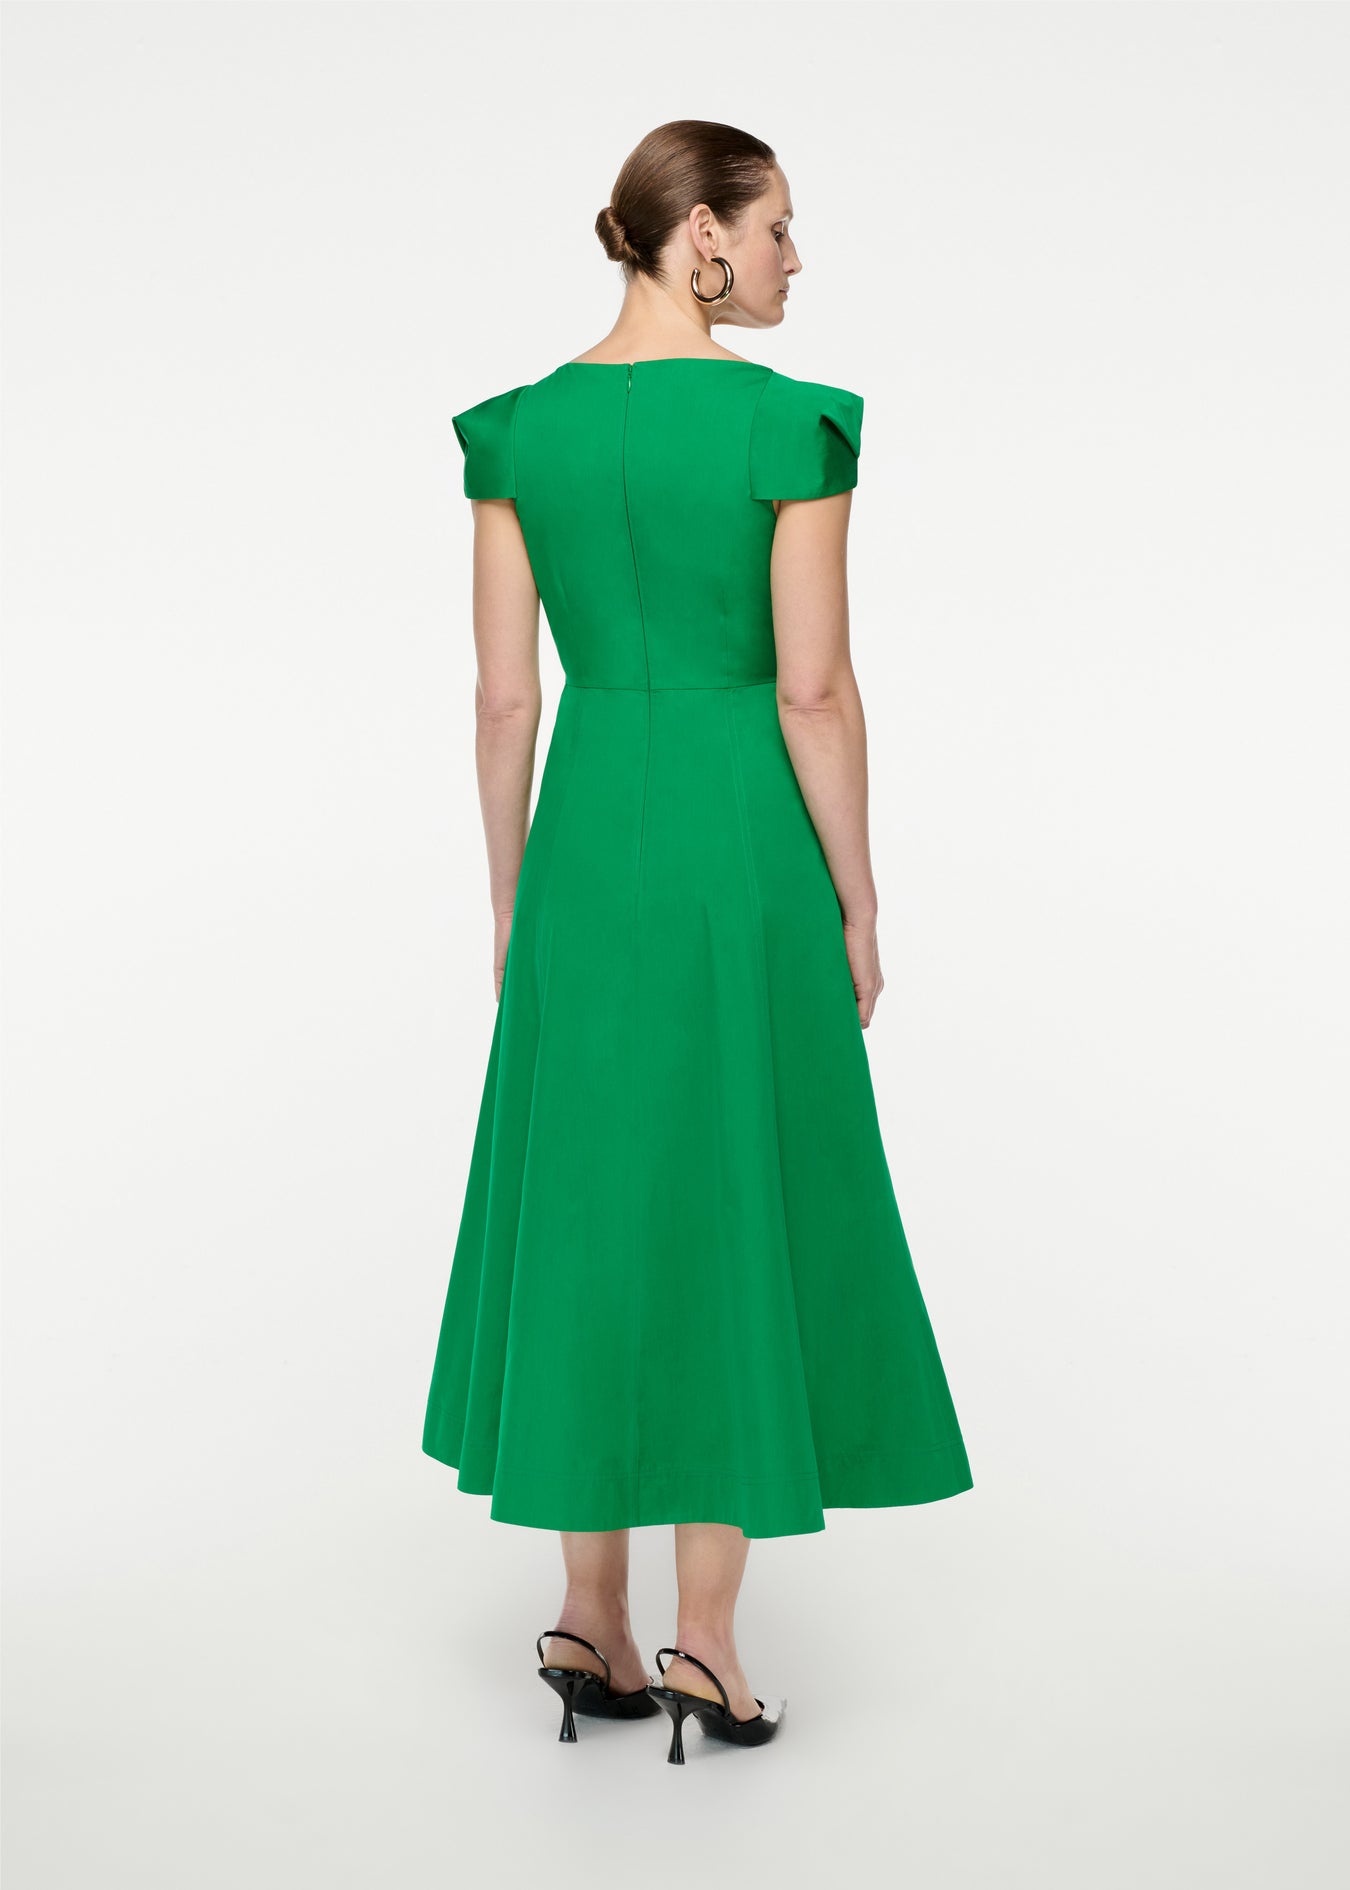 The back of a woman wearing the Cap Sleeve Cotton Poplin Midi Dress in Green